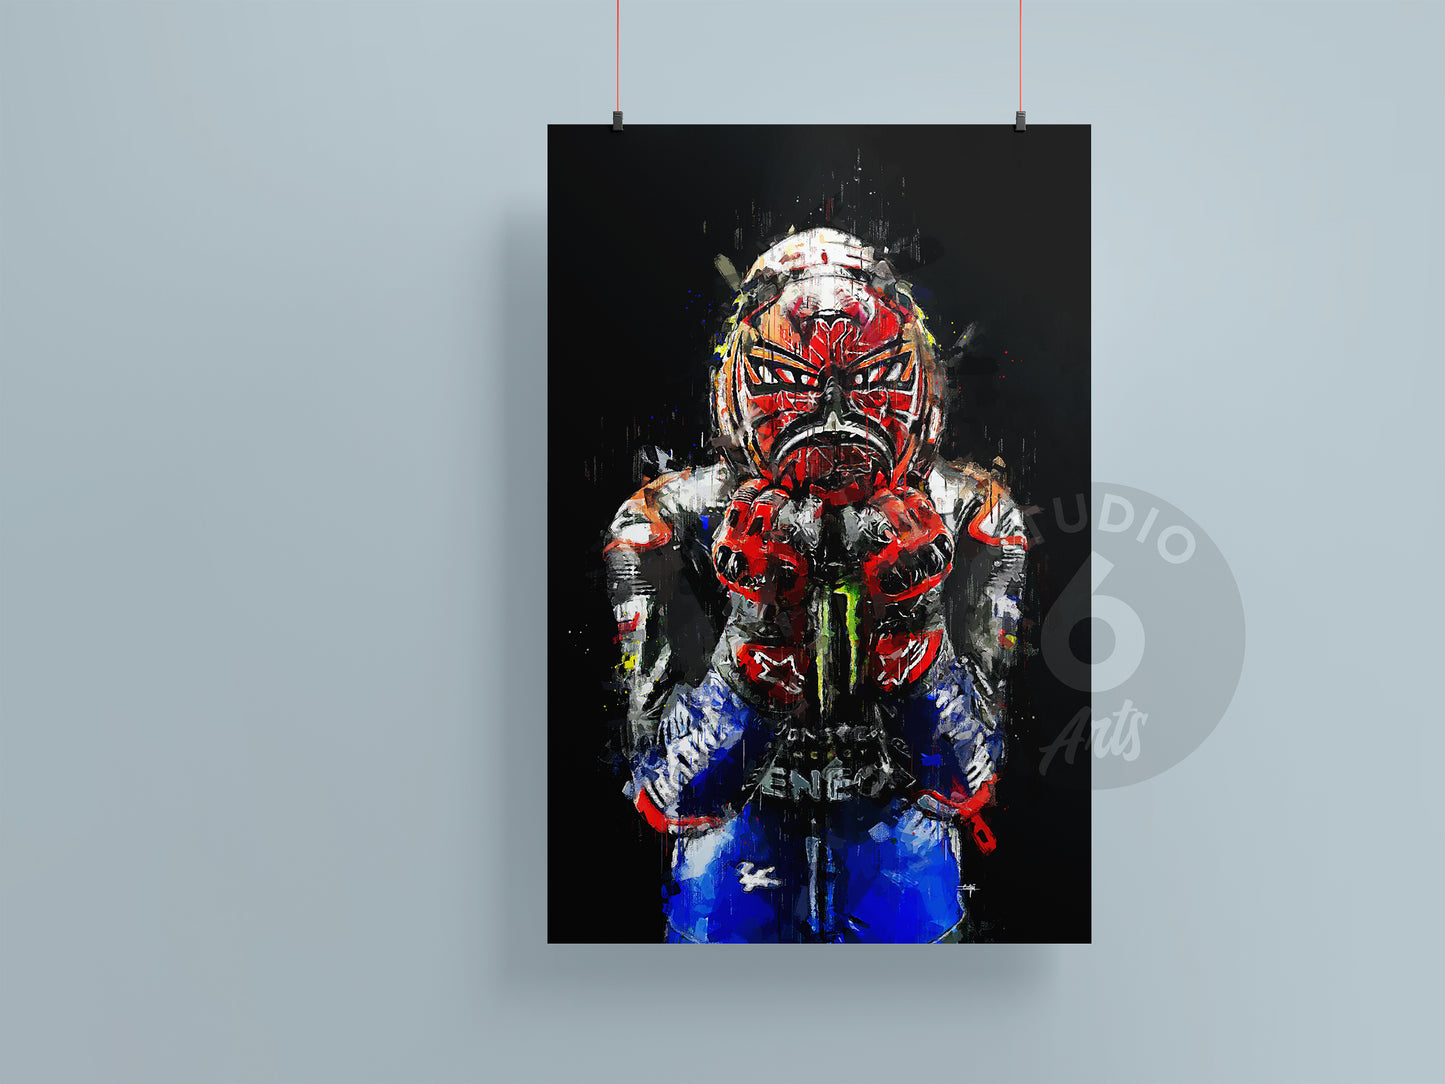 Fabio Quartararo Poster and Canvas, Motogp Print, Motorcycle Rider Poster